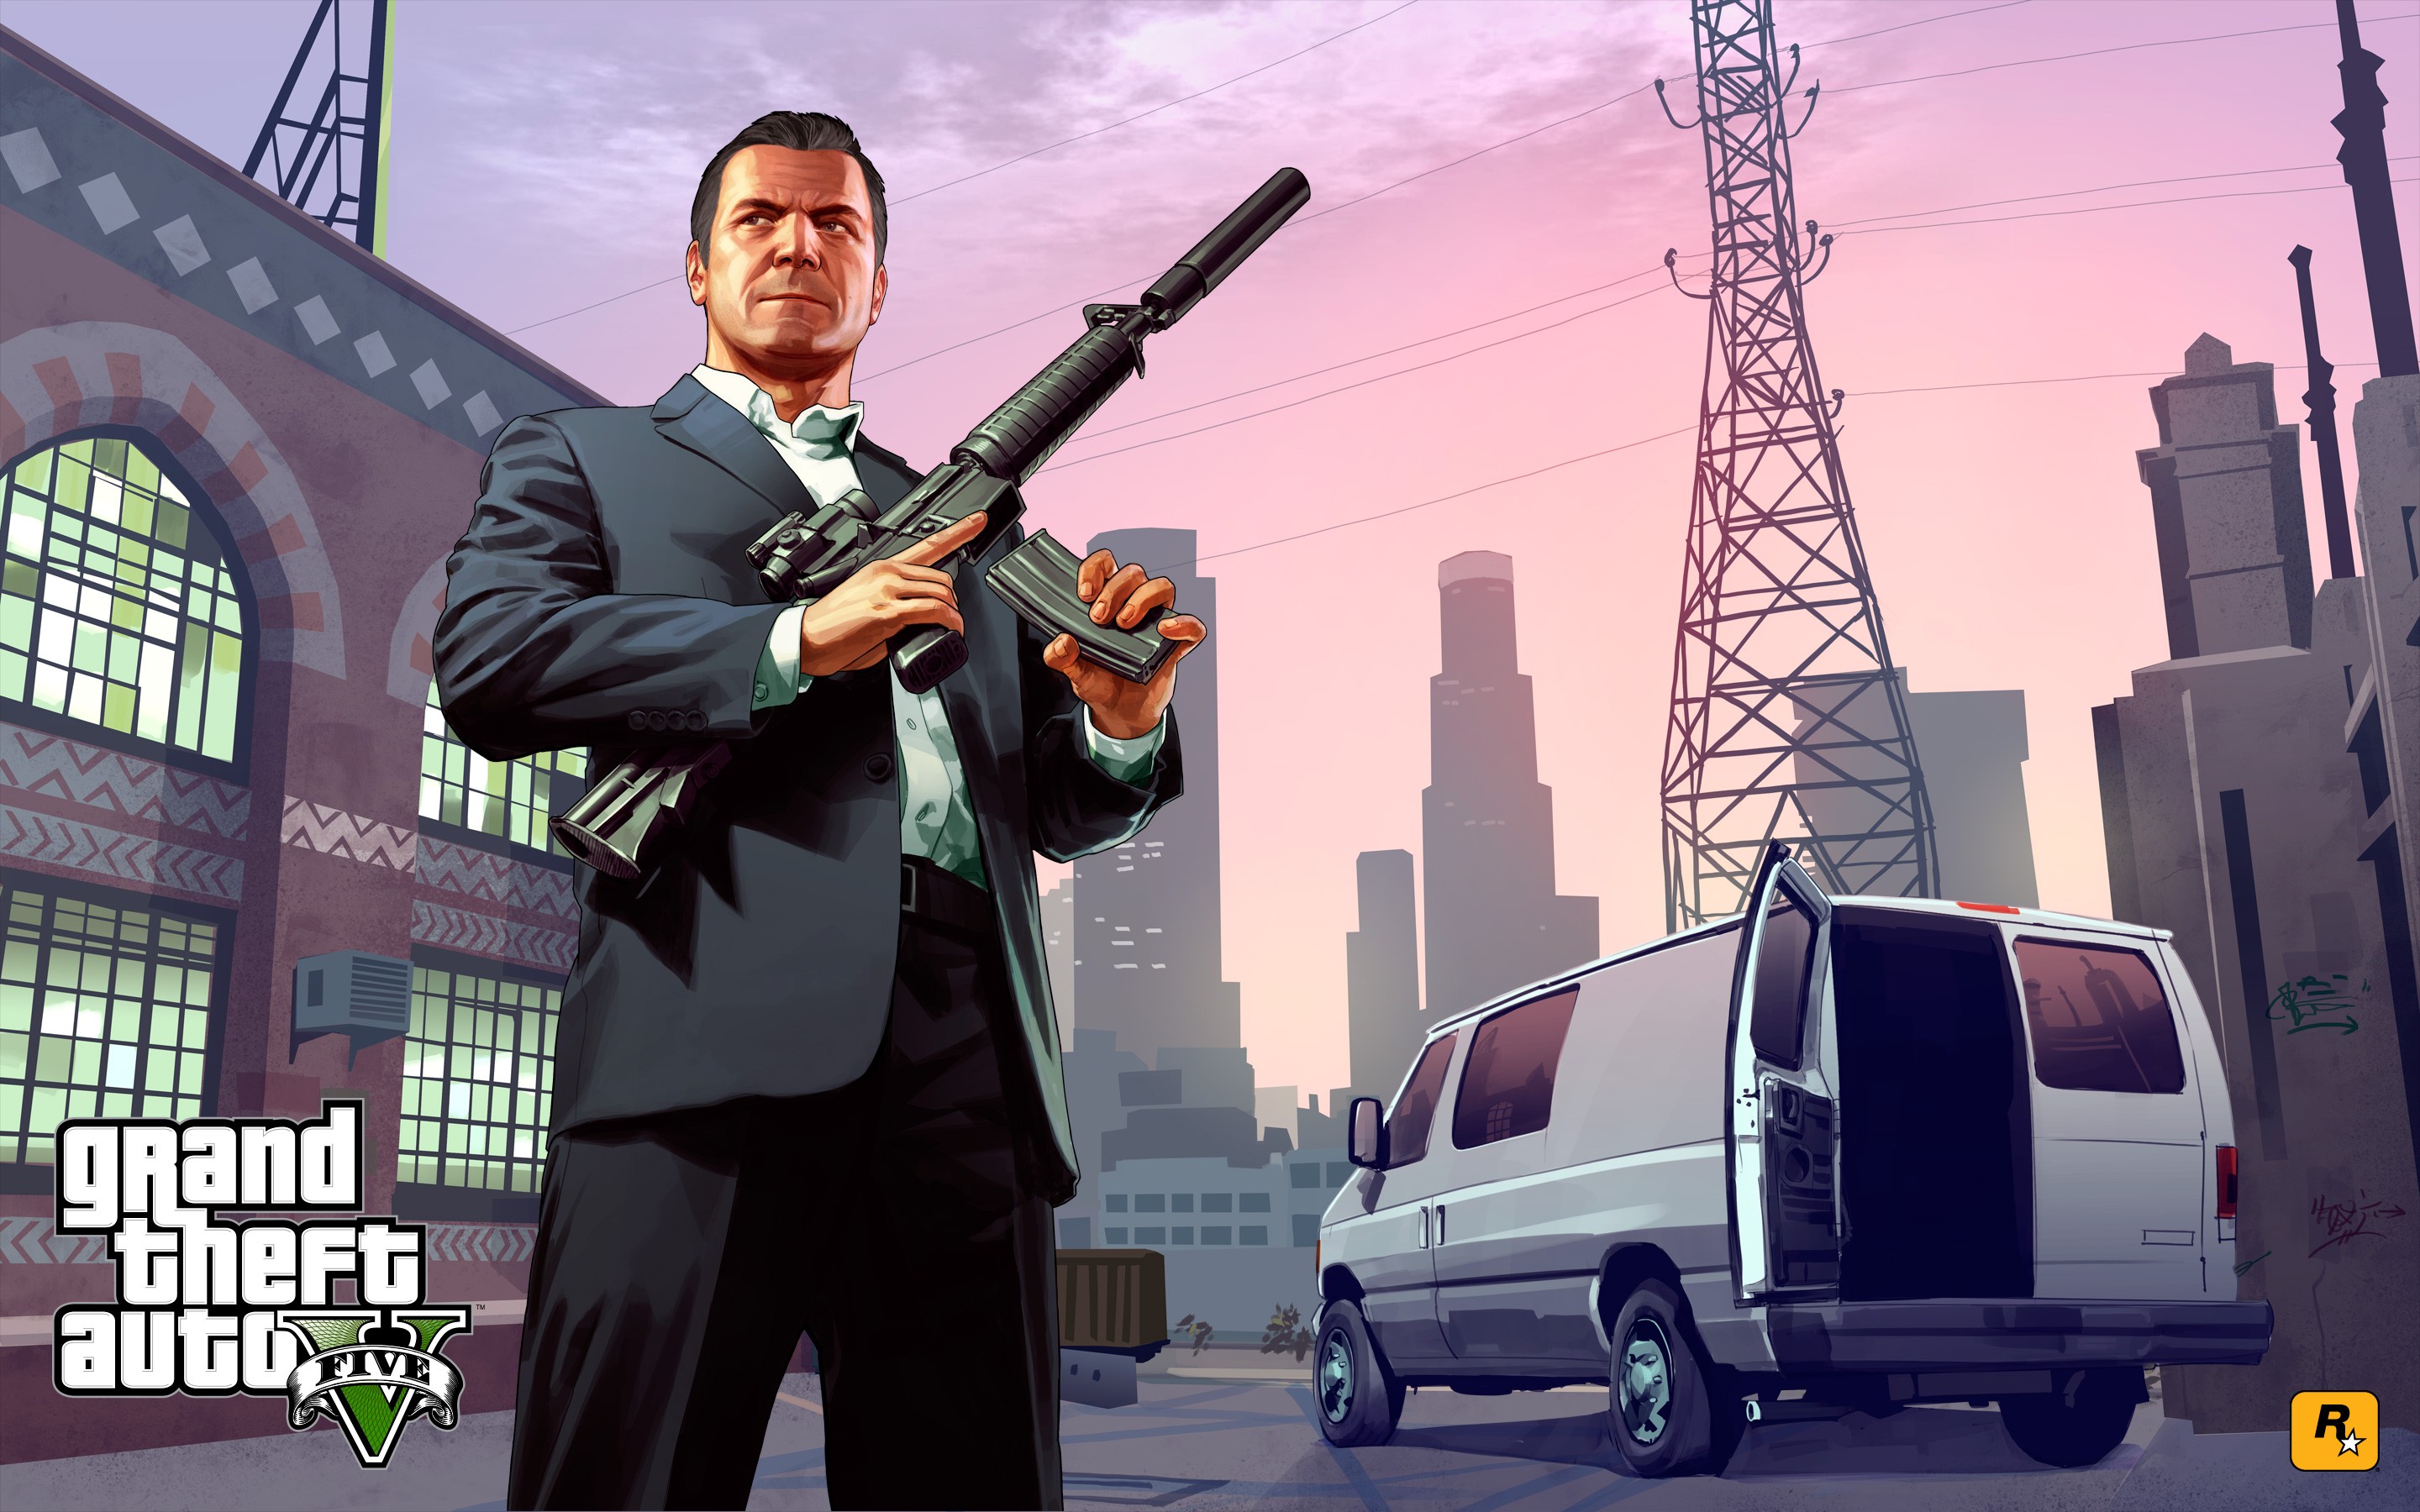 Grand Theft Auto V Grand Theft Auto Video Games Vans 2880x1800